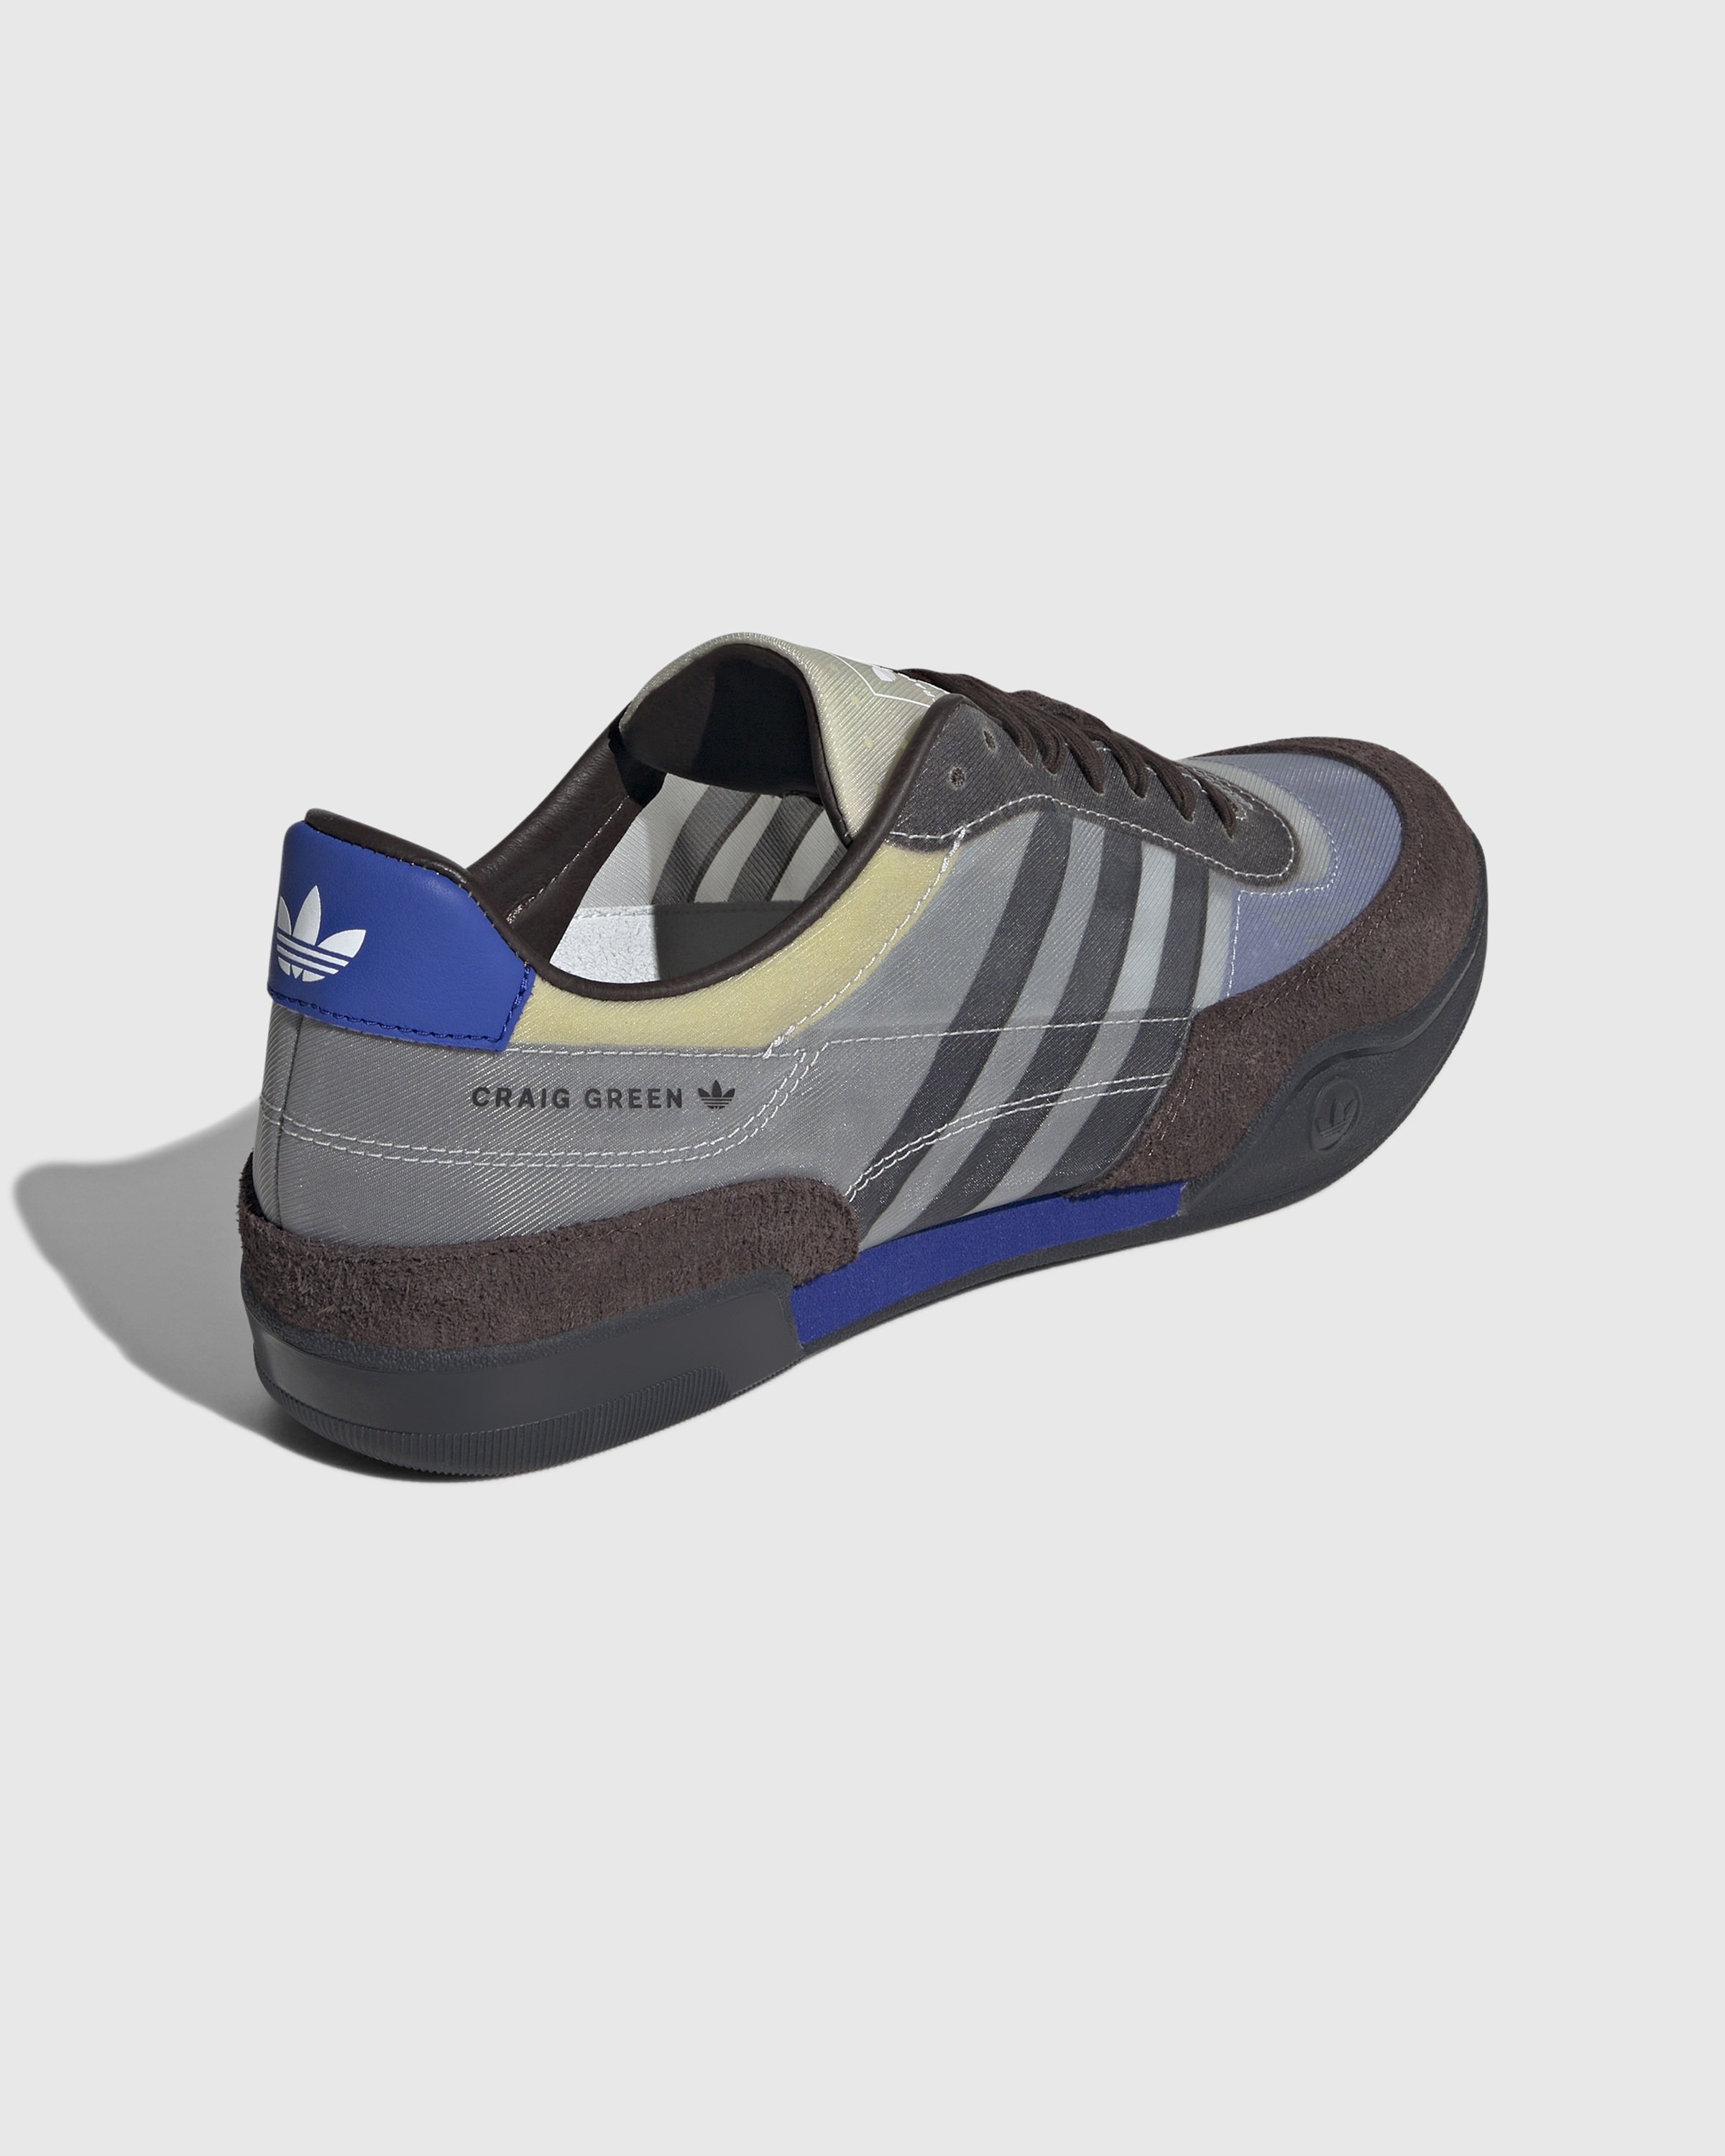 Adidas x Craig Green – Squash Polta Akh Multi/Core White/Gum - Low Top Sneakers - Multi - Image 4